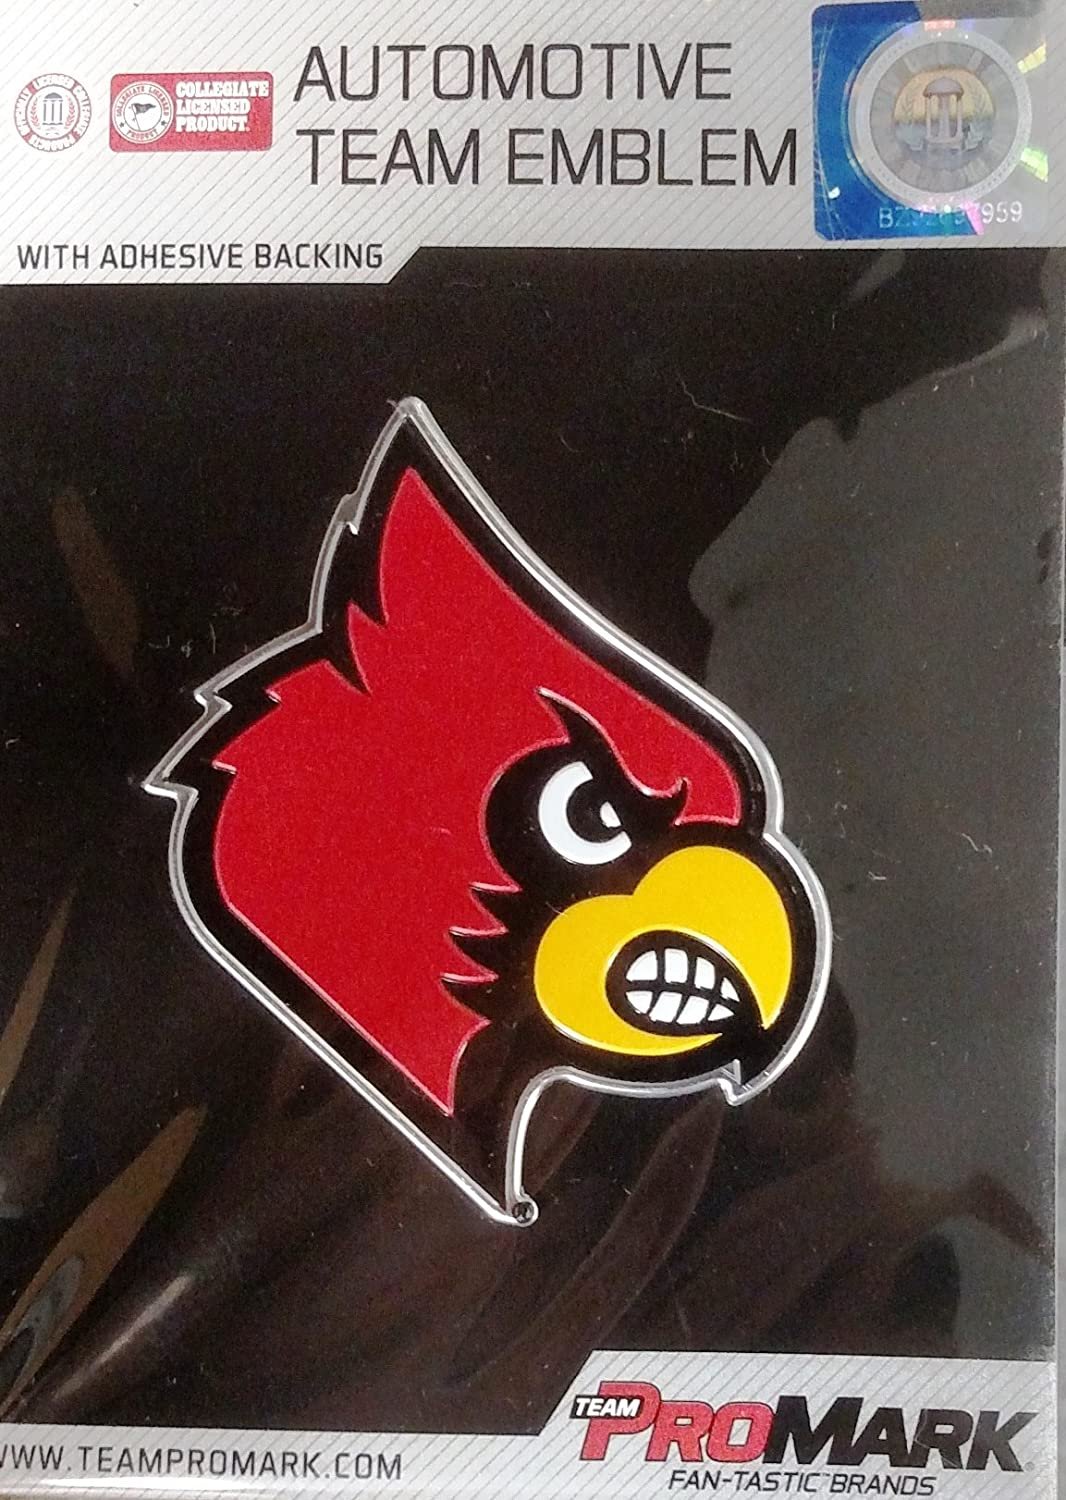 University of Louisville Cardinals Auto Emblem, Aluminum Metal, Embossed Team Color, Raised Decal Sticker, Full Adhesive Backing